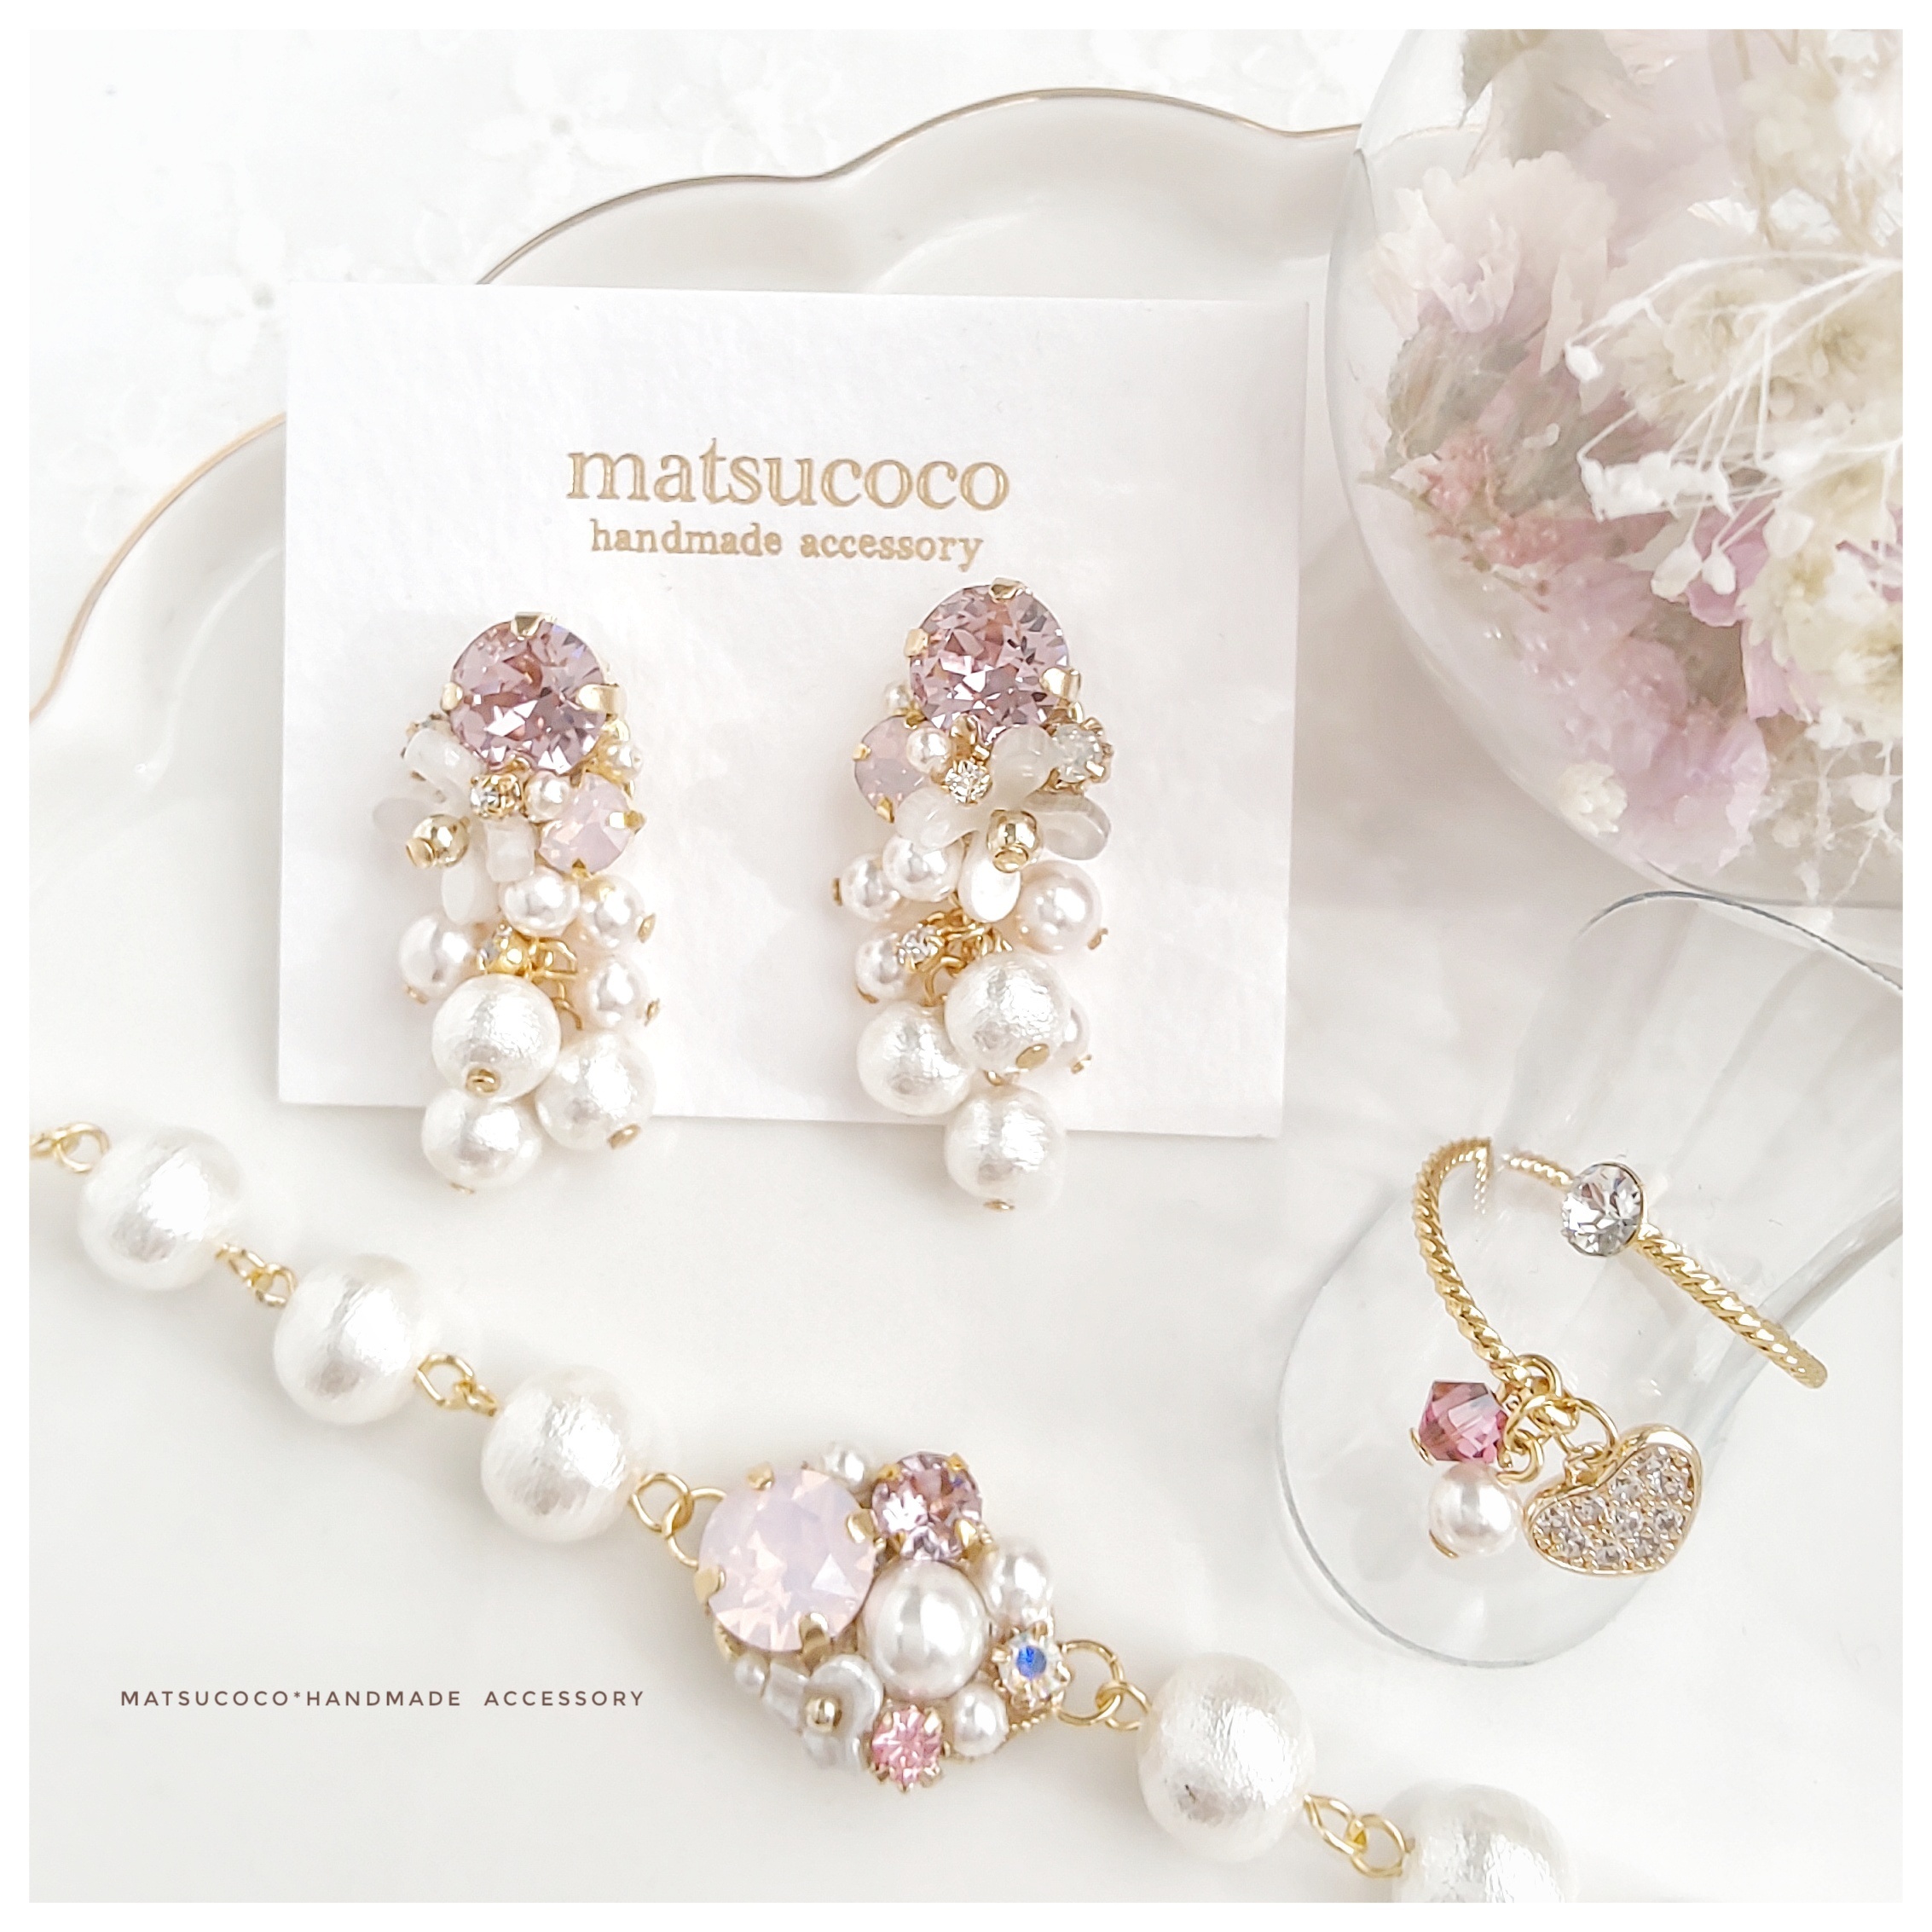 matsucoco handmade accessory